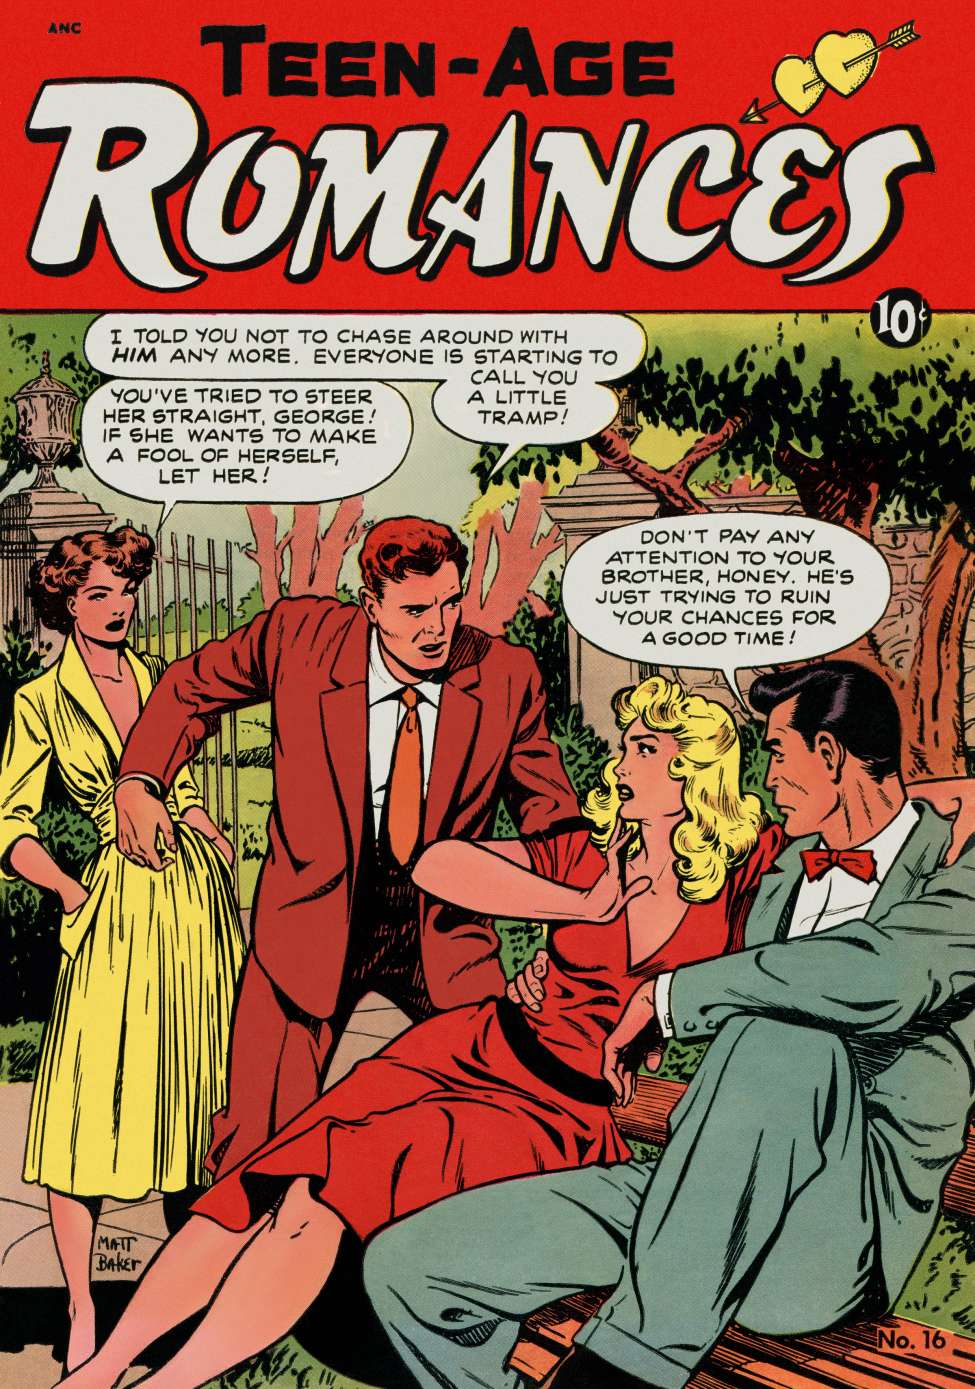 Teen Age Romances #16. St. John